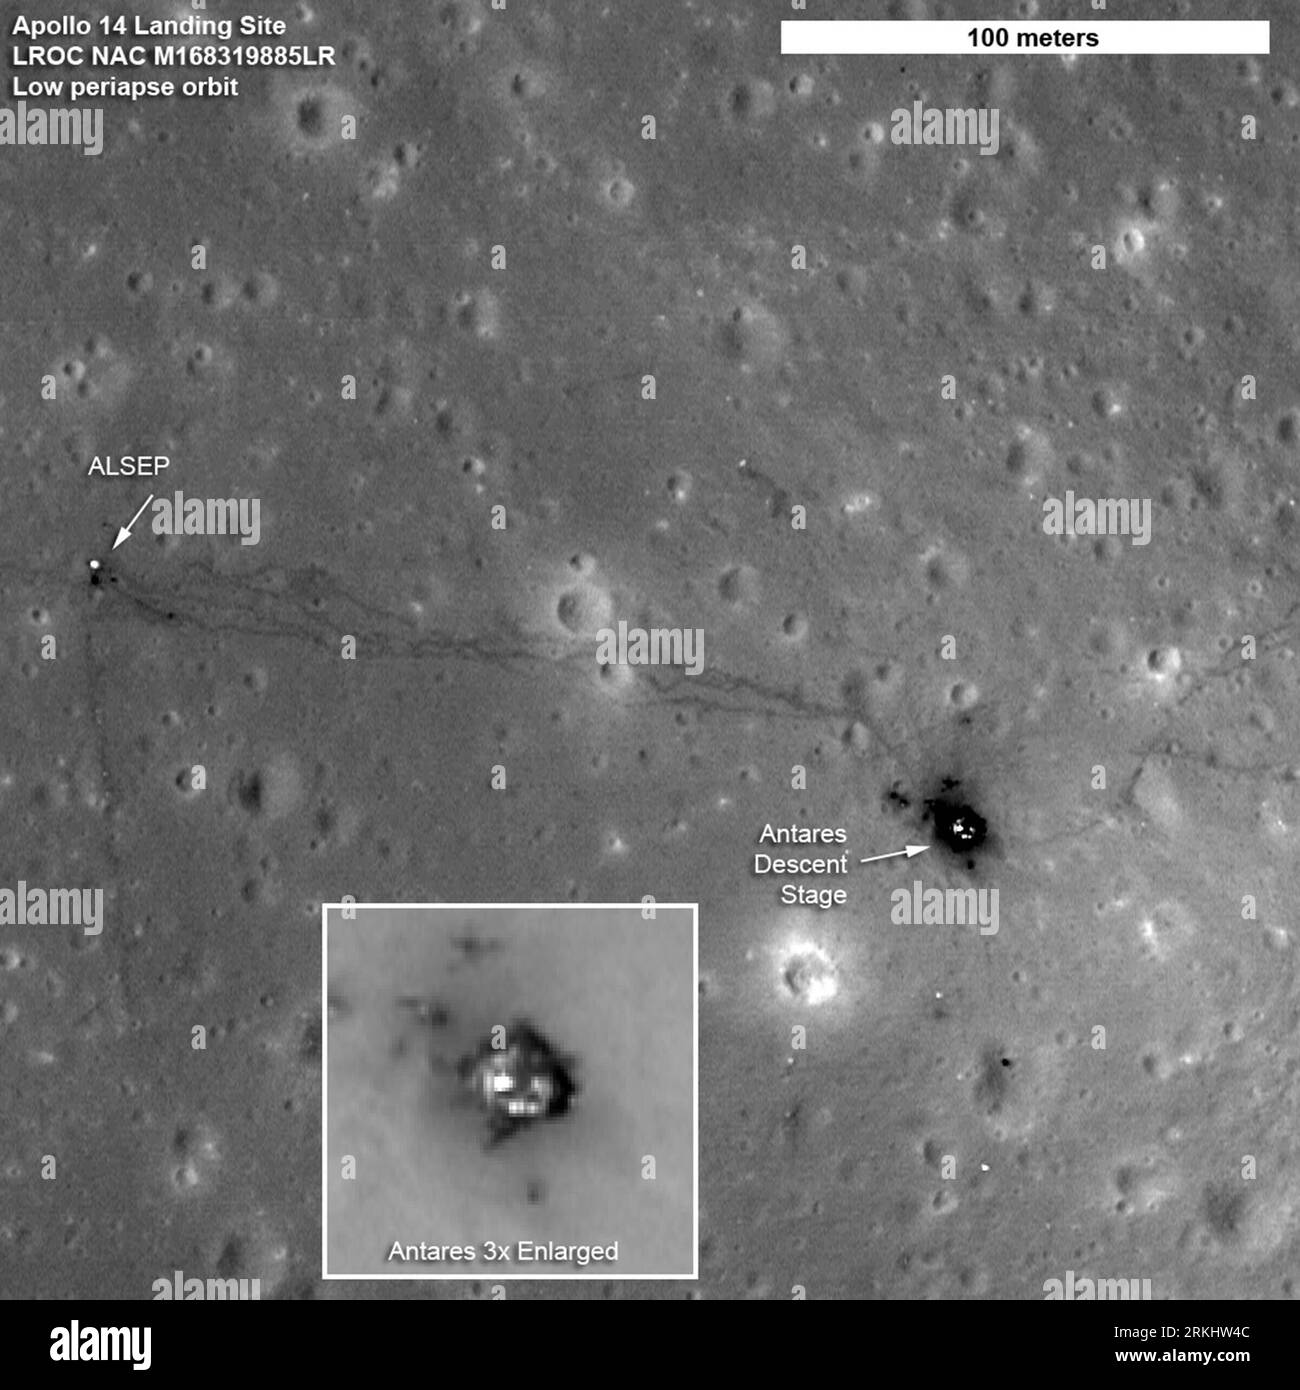 Bildnummer: 55903045  Datum: 06.09.2011  Copyright: imago/Xinhua (110907) -- WASHINGTON, Sept. 7, 2011 (Xinhua) -- Photo released by NASA on Sept. 6, 2011 shows the Apollo 14 landing site. NASA s Lunar Reconnaissance Orbiter (LRO) captured the sharpest images ever taken from space of the Apollo 12, 14 and 17 landing sites, the U.S. space agency announced Tuesday. (Xinhua/NASA) (lr) U.S.-NASA-APOLLO LANDING SITES-SHARPER VIEWS PUBLICATIONxNOTxINxCHN Gesellschaft Wissenschaft Raumfahrt Mond Landung Mondlandung Landestelle sw xns x0x 2011 quadrat      55903045 Date 06 09 2011 Copyright Imago XINH Stock Photo